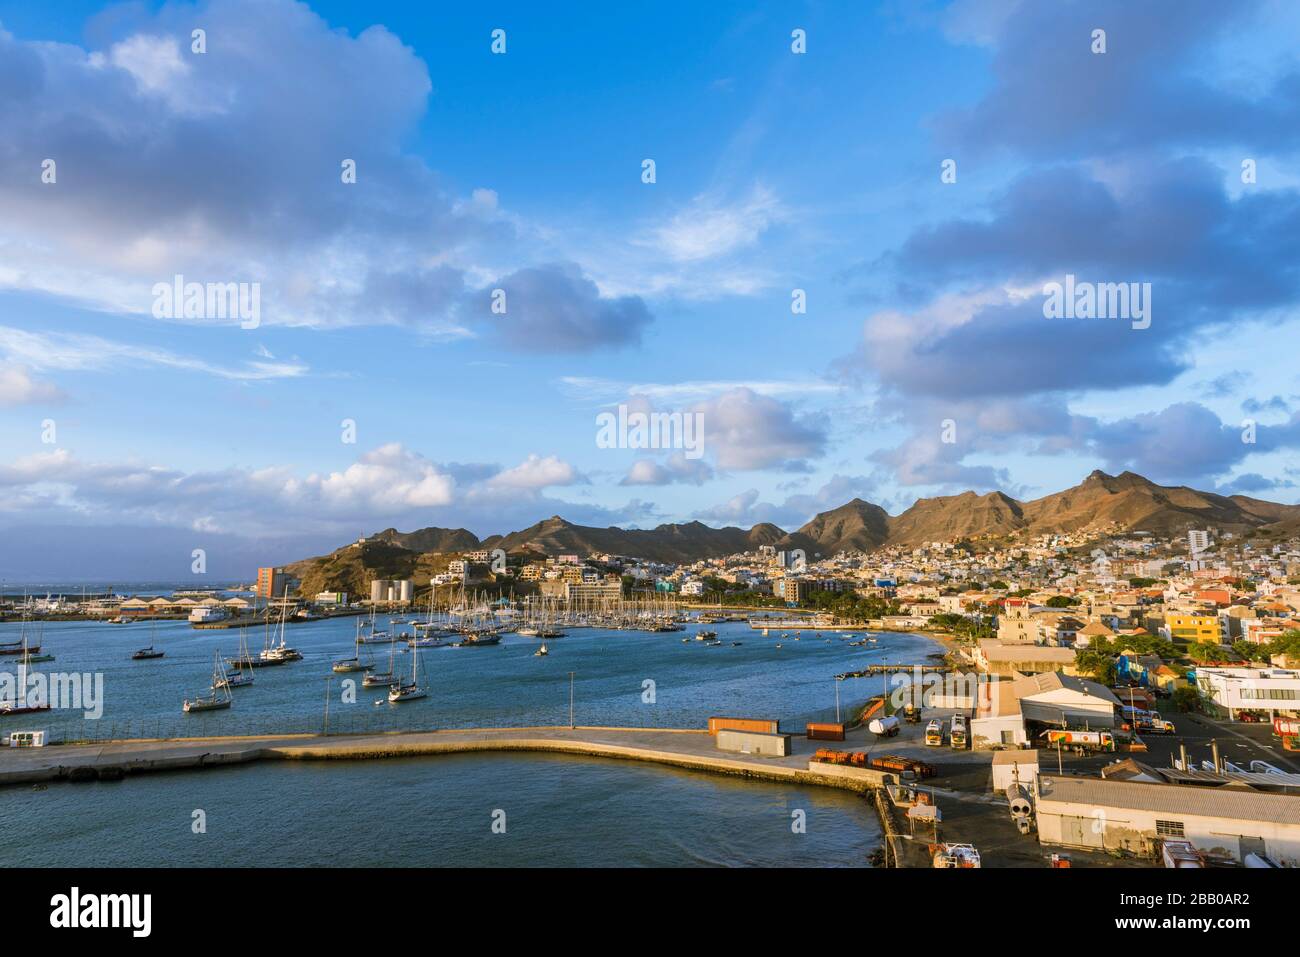 The City of Mindelo and Porto Grande Bay, Mindelo, Sao Vicente, Cape Verde Islands, Africa. Stock Photo